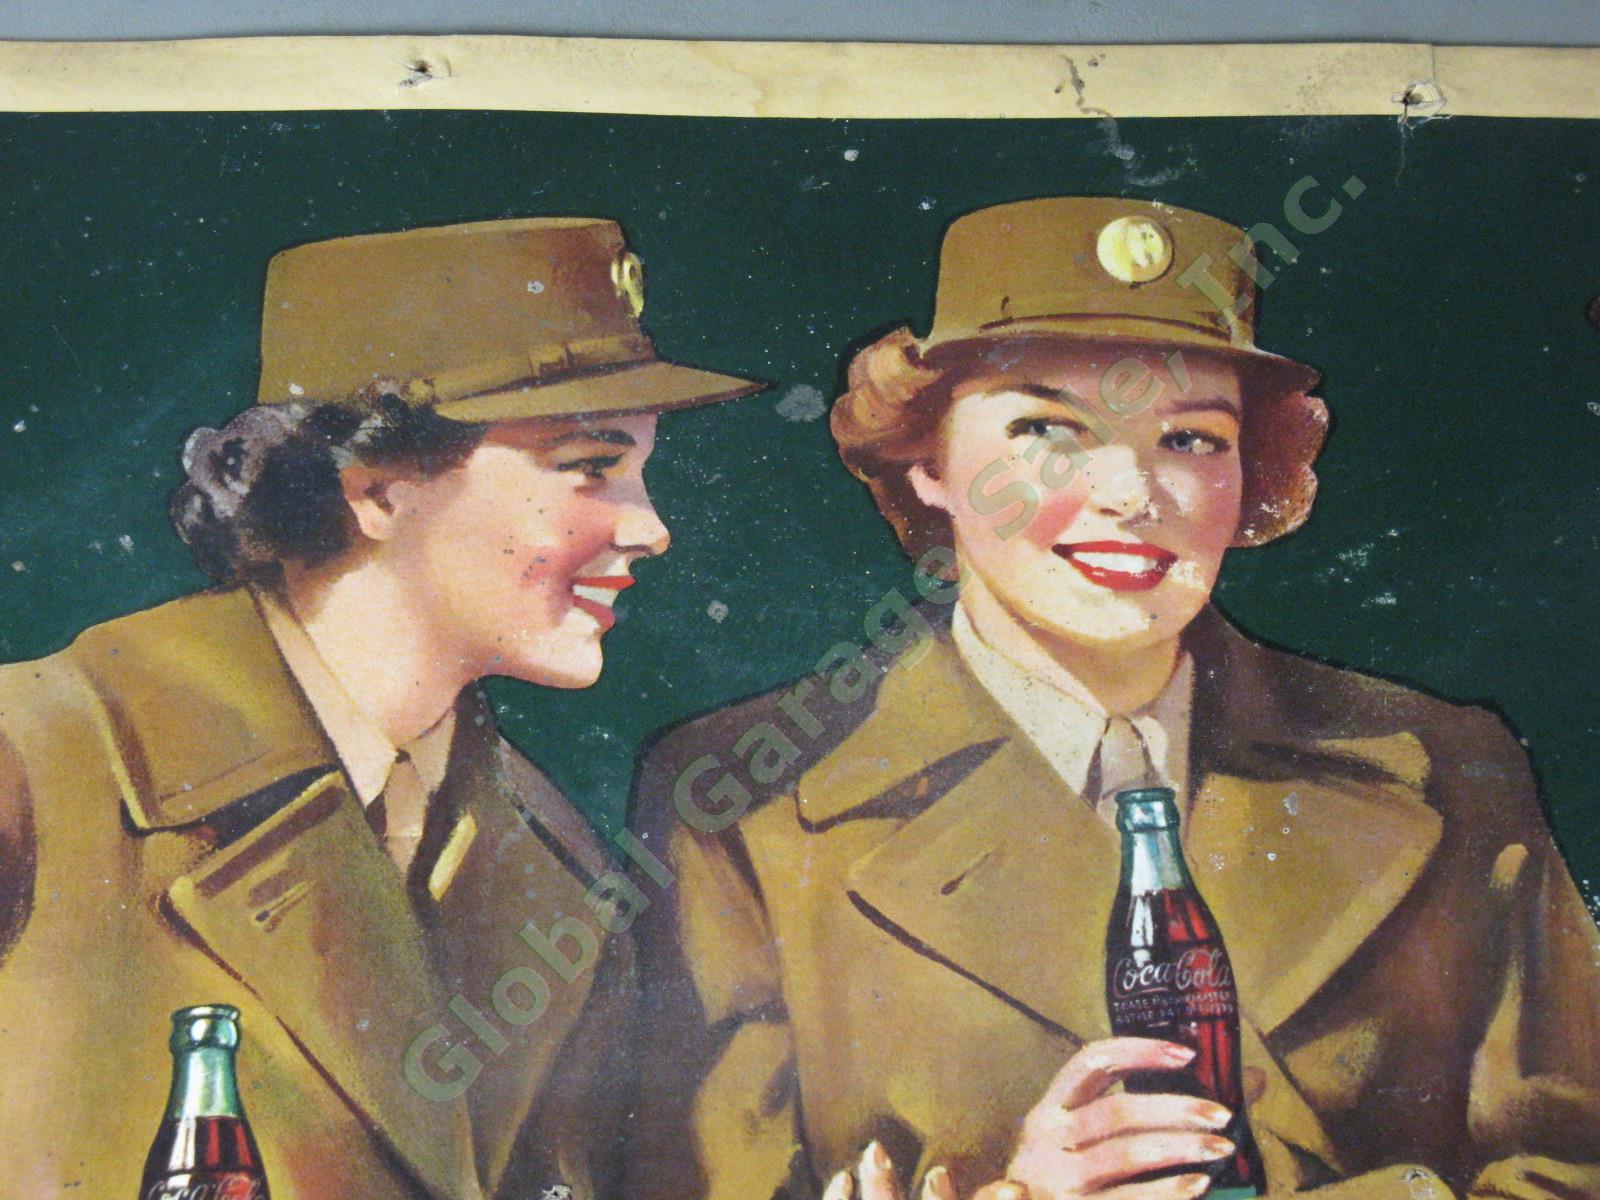 Vtg 1943 Drink Coca Cola Cardboard Litho Sign Advertising Poster 20x36 WWII Era 3